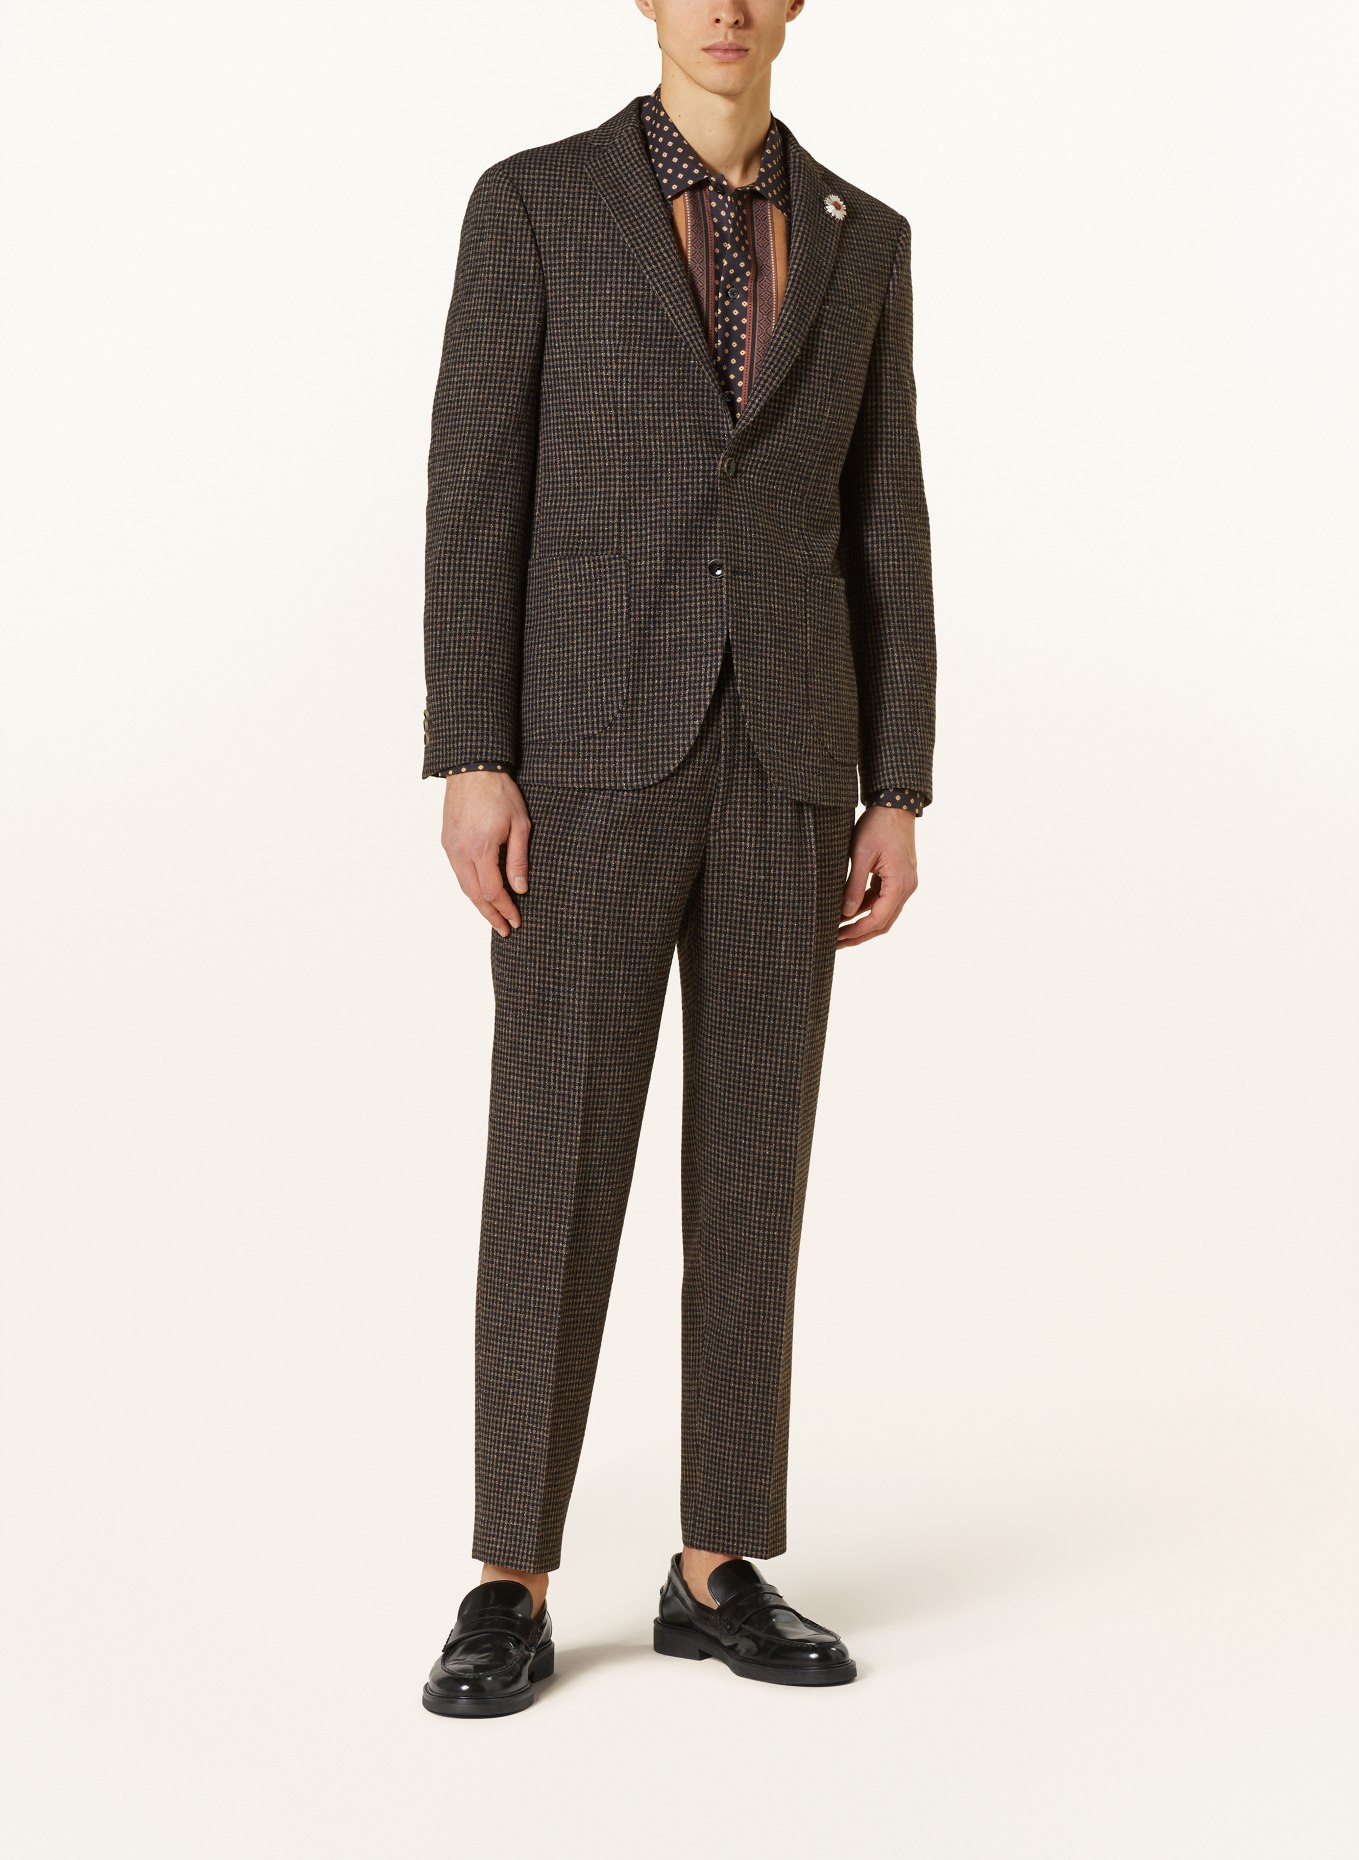 BALDESSARINI Suit jacket slim fit in tweed, Color: 8617 Cappuchino Check (Image 2)